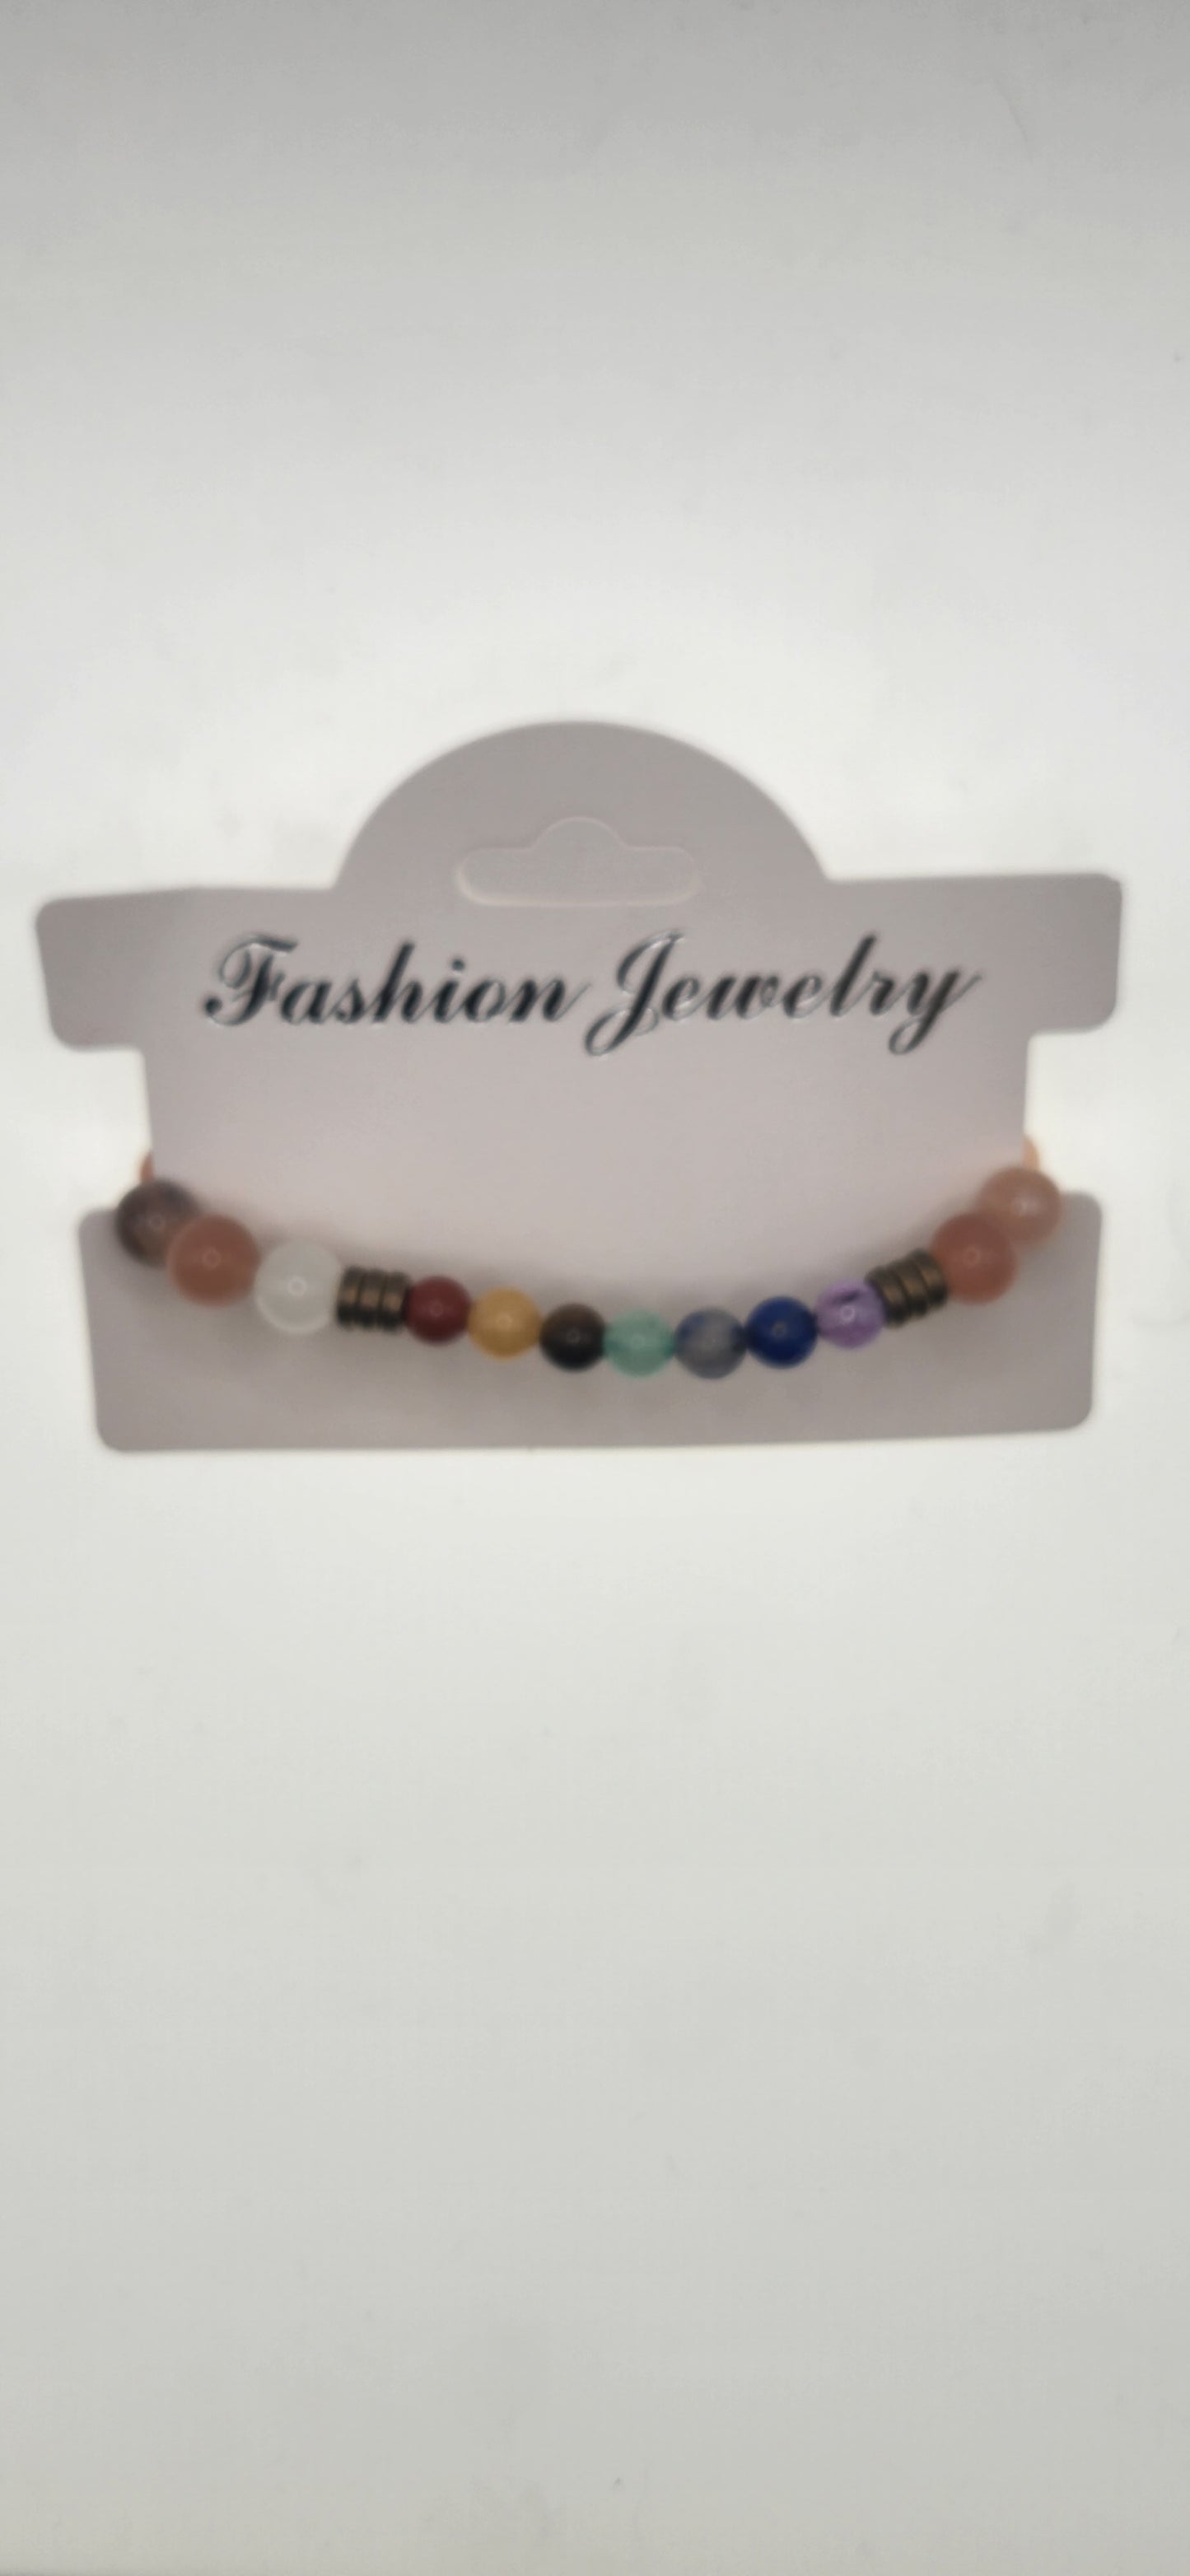 Chakra beads, semi-precious stone beads